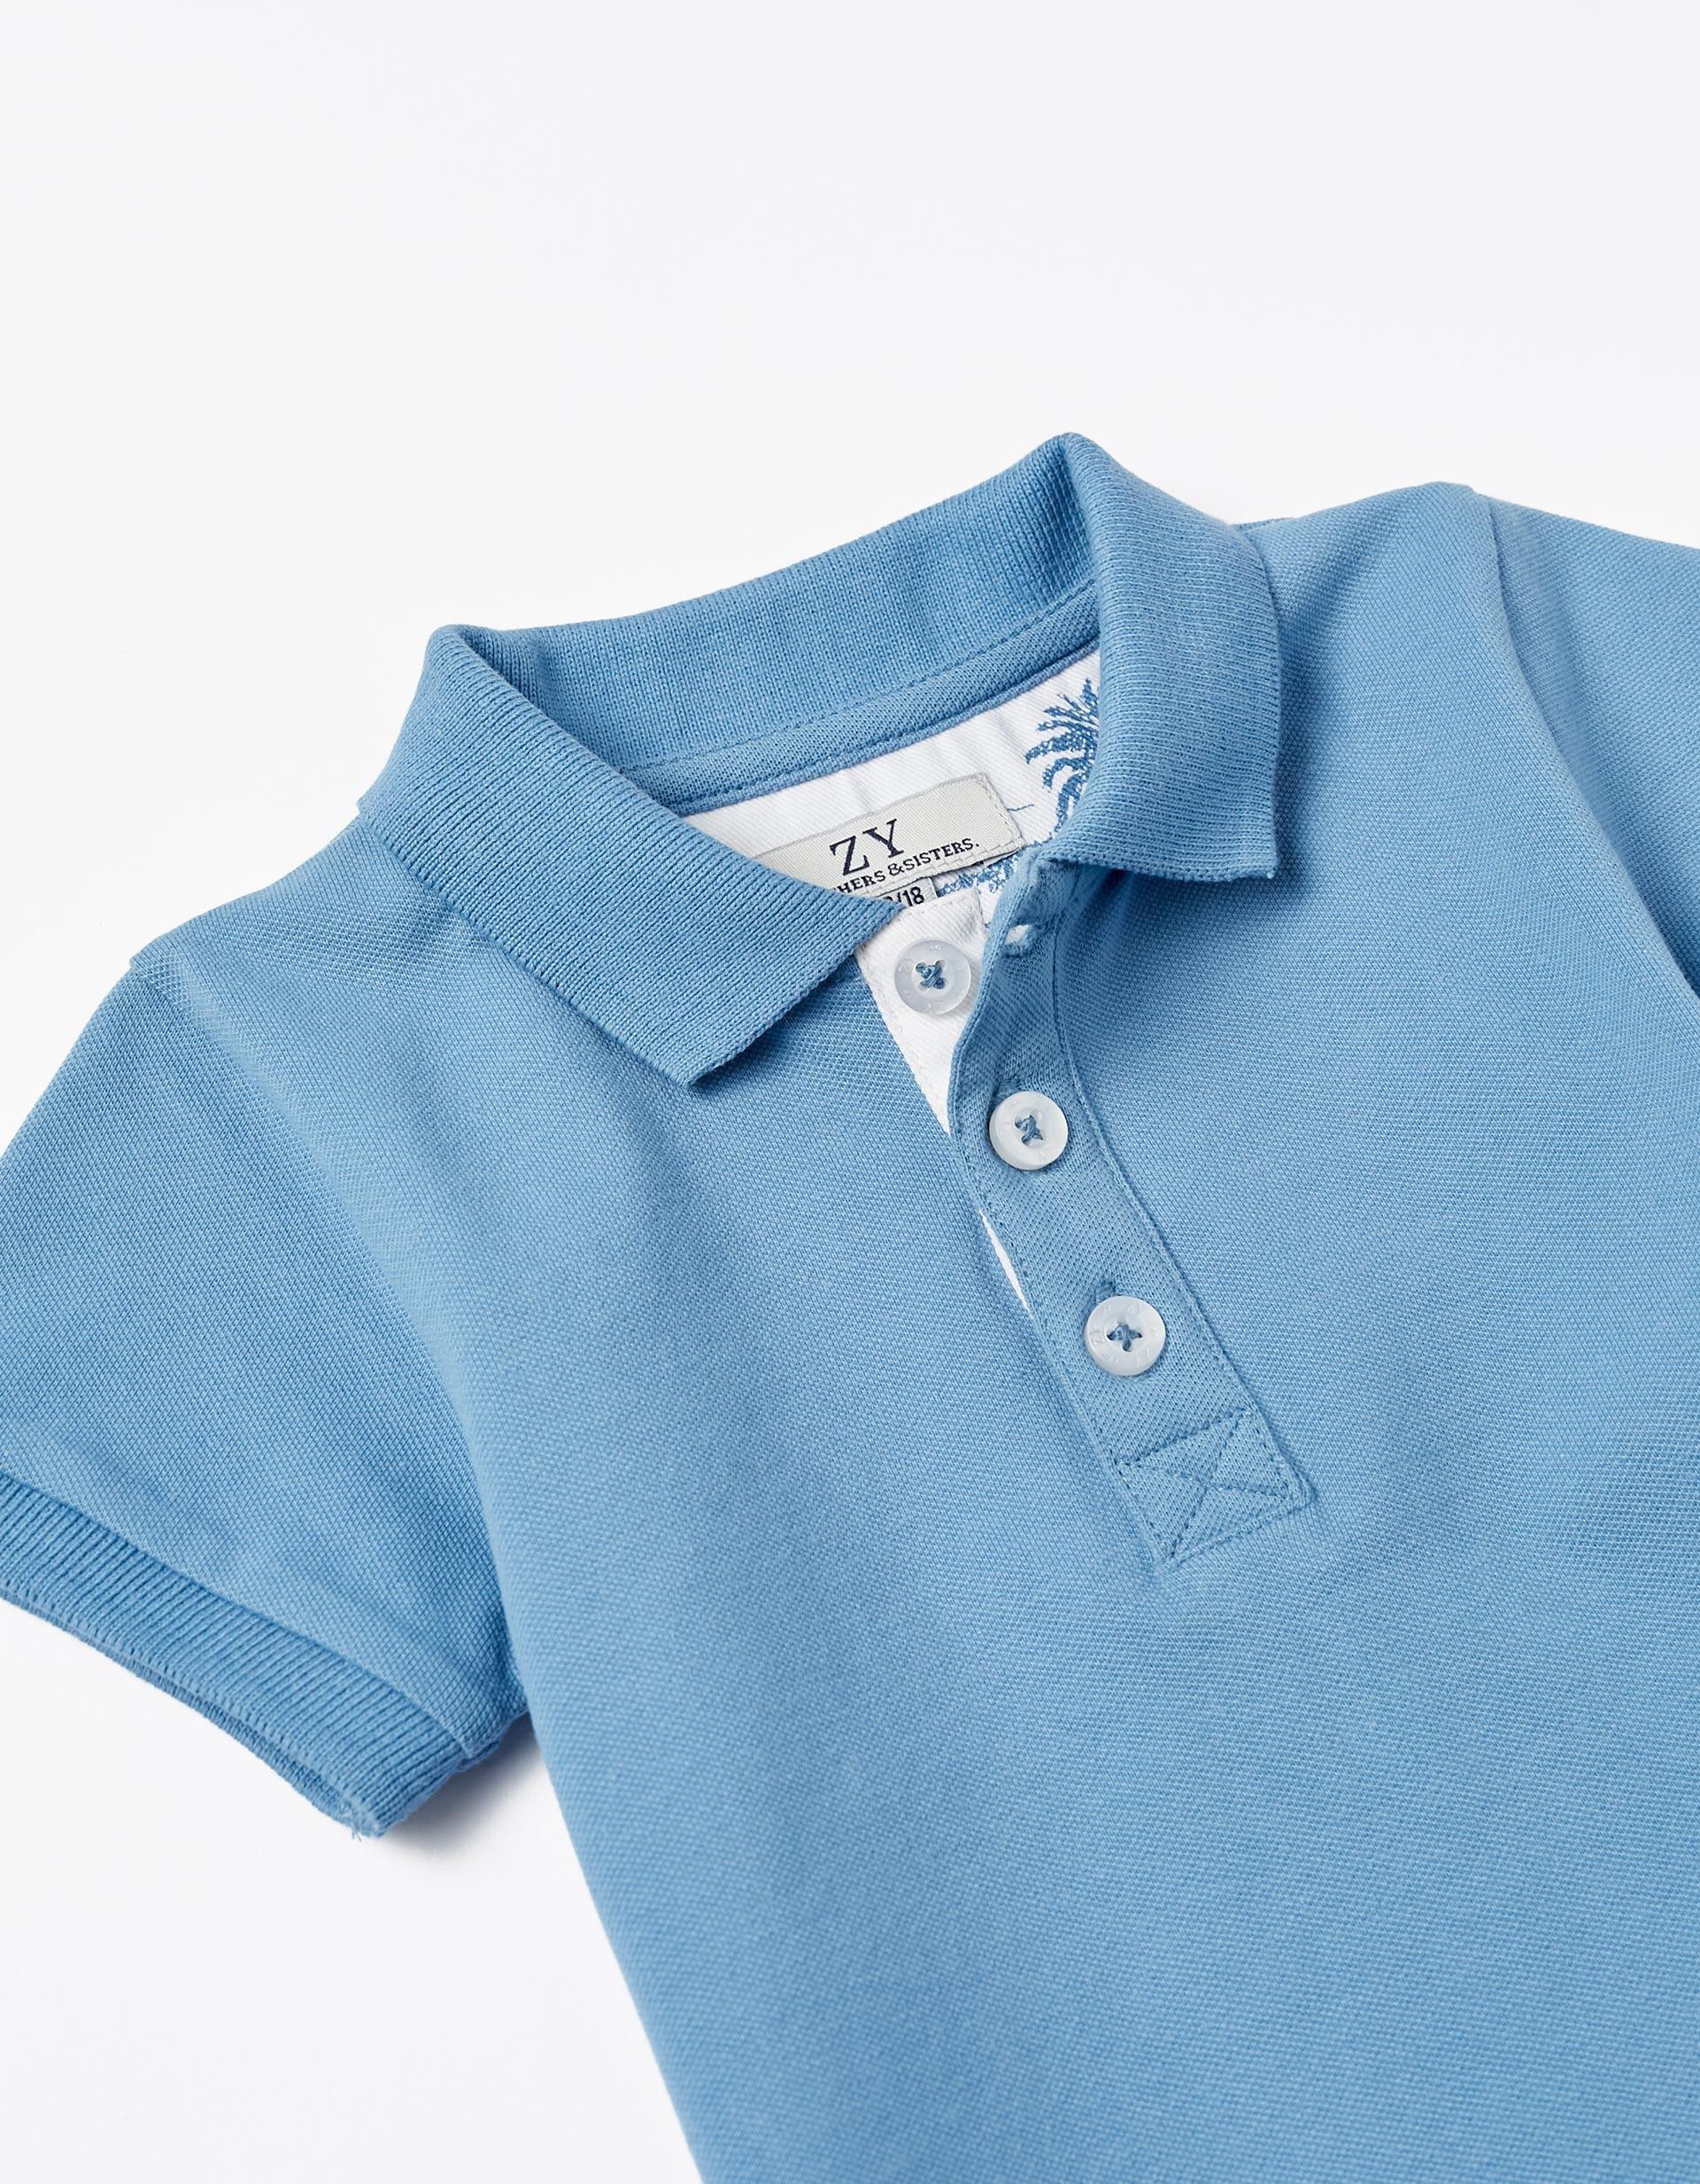 Gant - Blue Polo Neck Shirt, Baby Boys